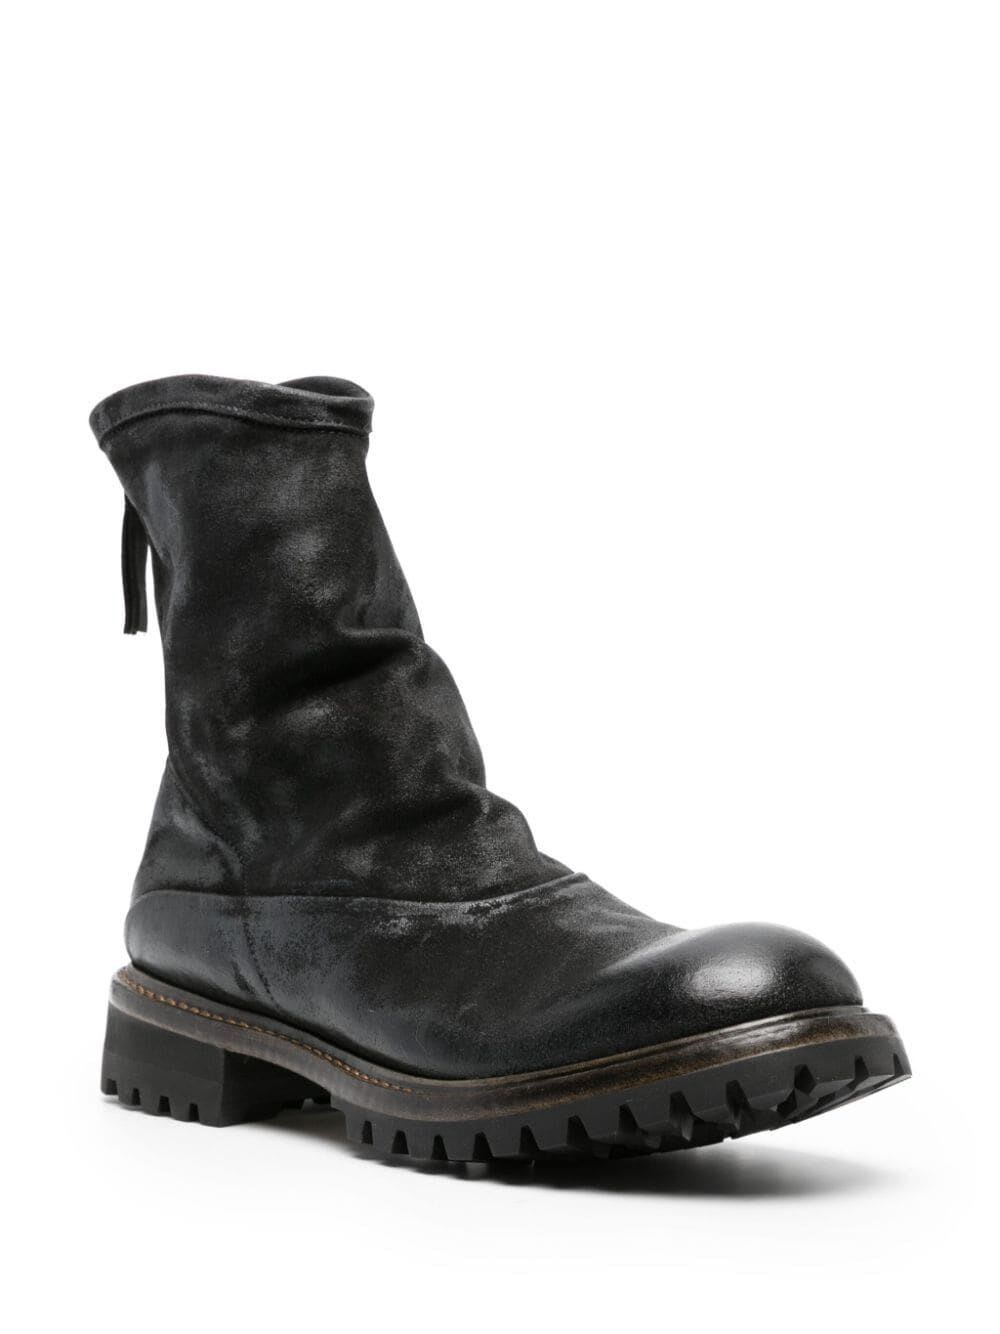 Premiata 32080 leather platform boots - Black